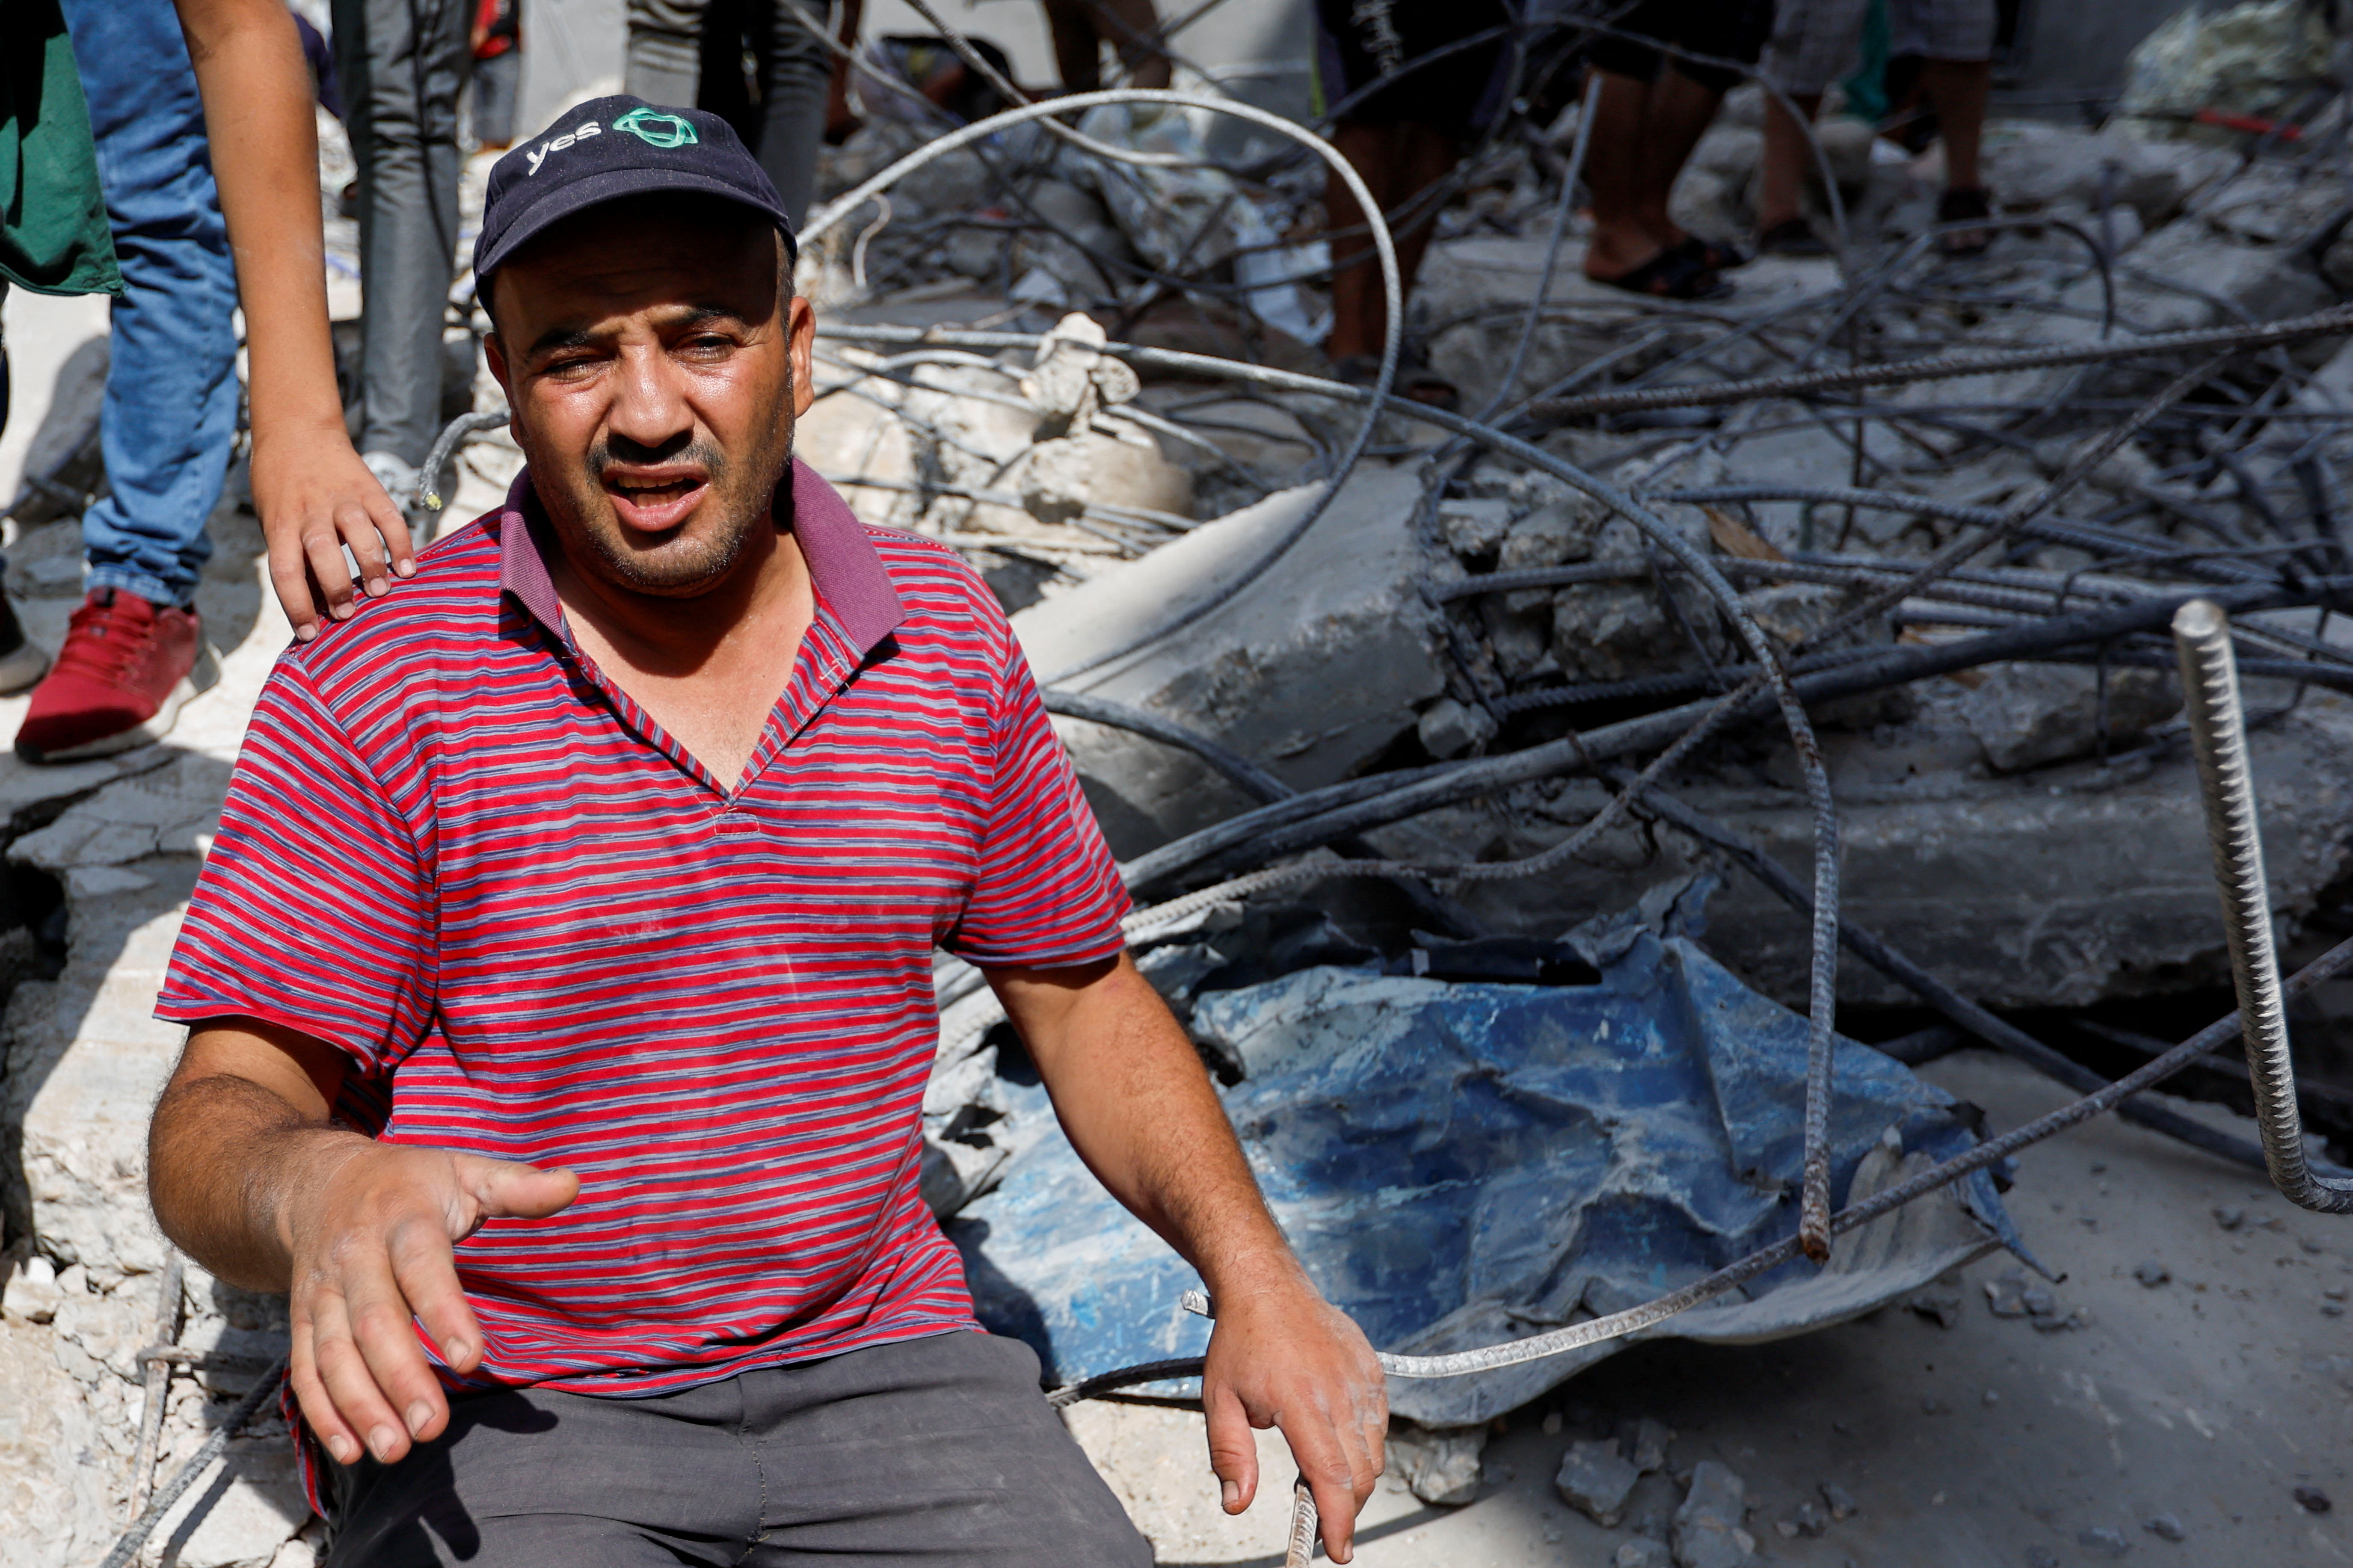 Aftermath of Israel-Gaza fighting